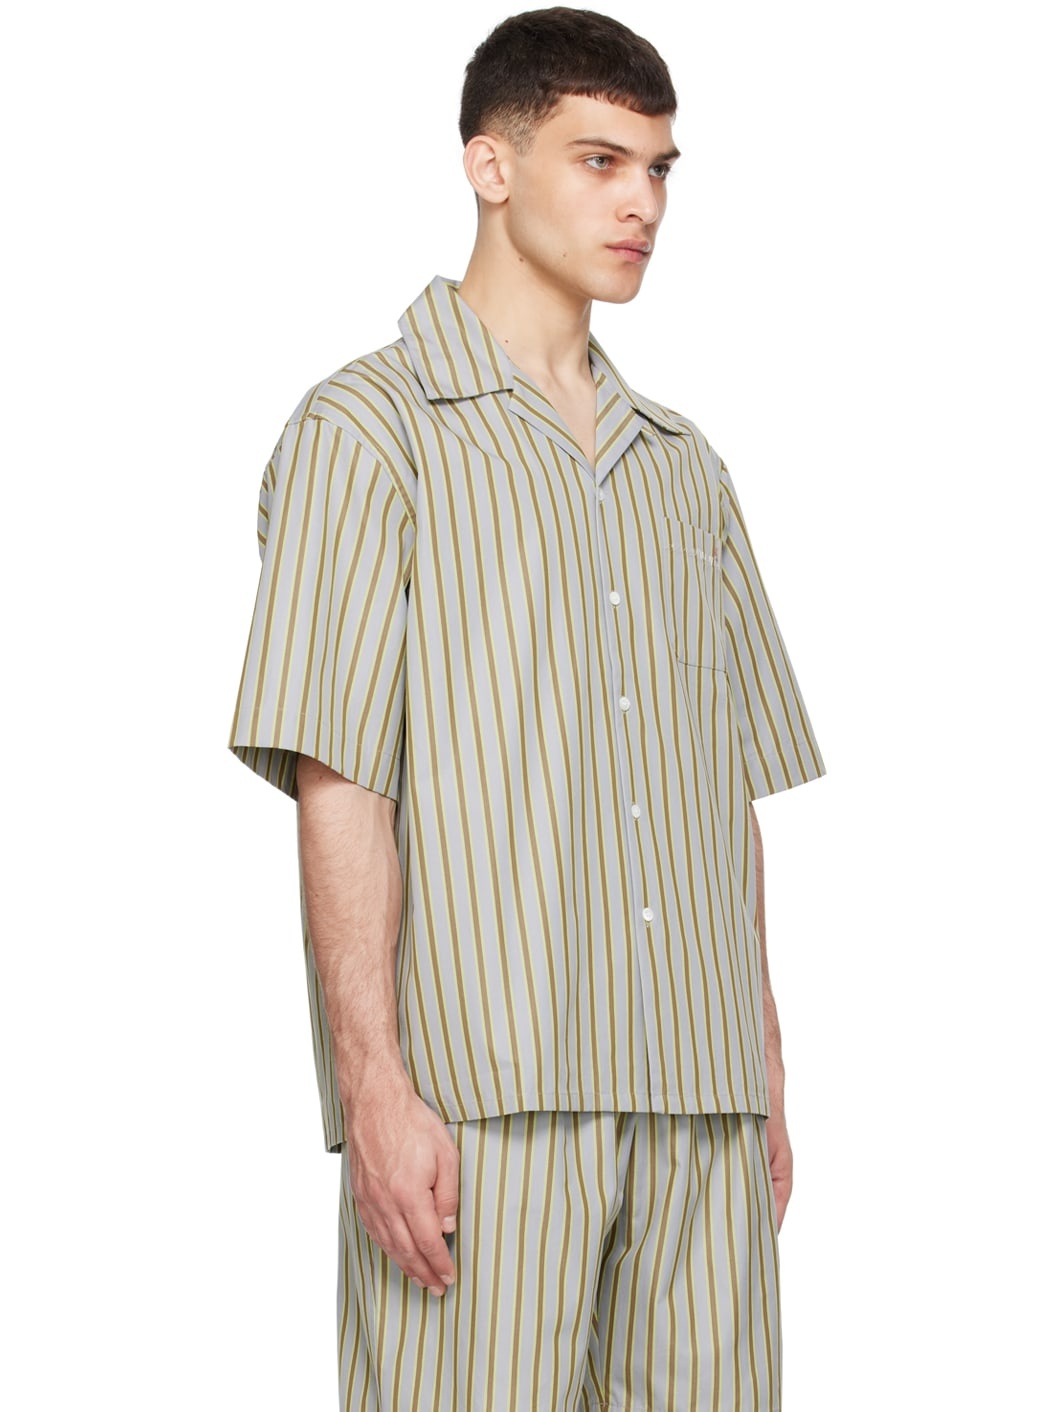 Brown & Gray Striped Shirt - 2